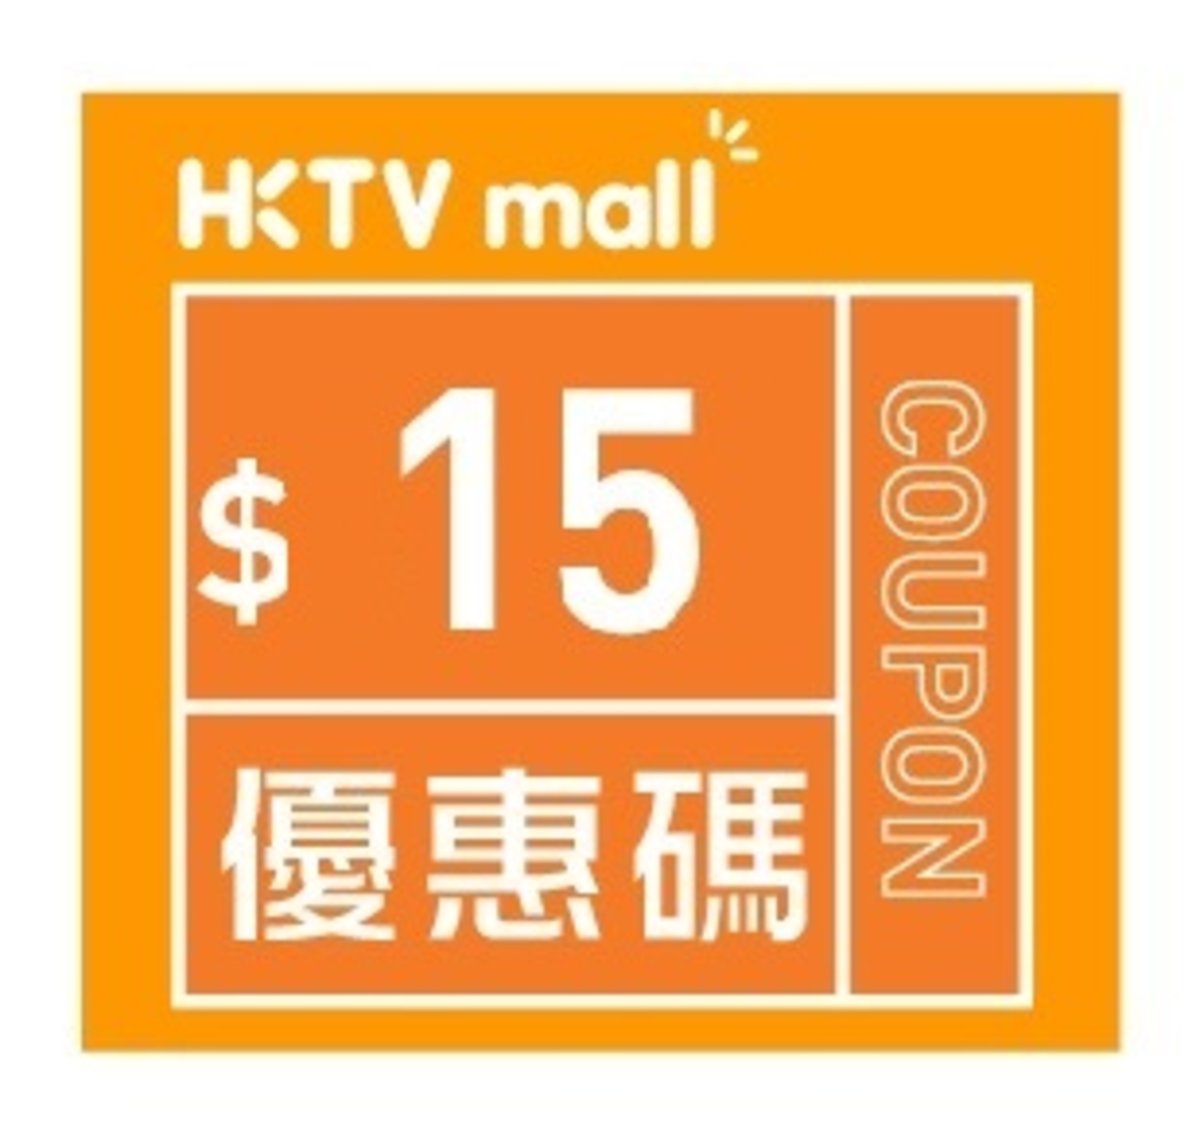 HKTVmall $15 Coupon [Valid: 2018.05.08 - 2018.06.30]